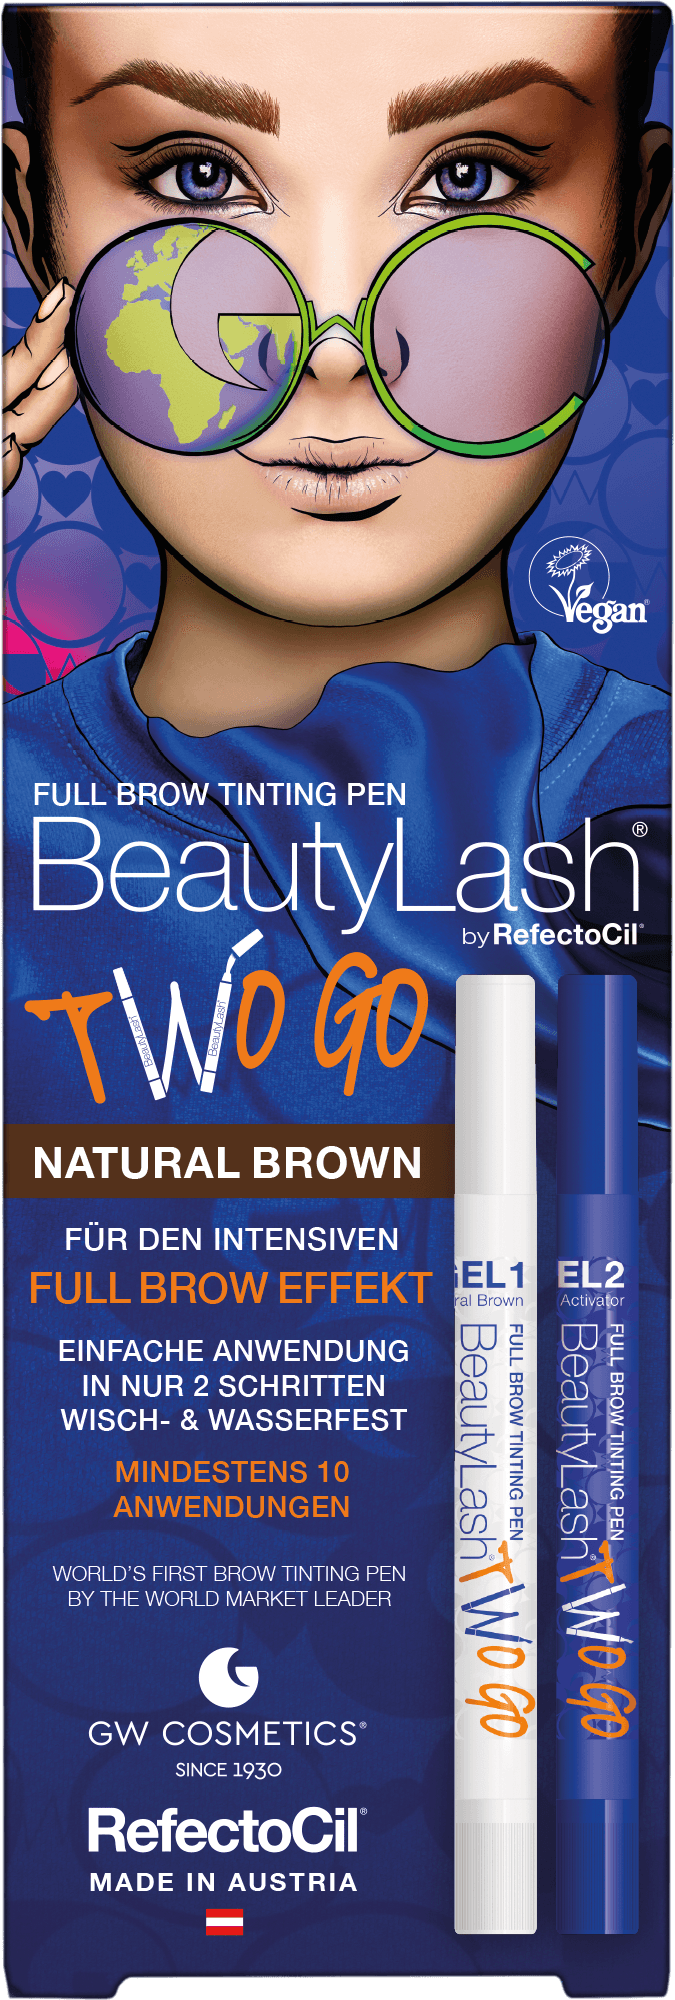 Produktbild von Full Brow Tinting Pen Two Go - Natural Brown